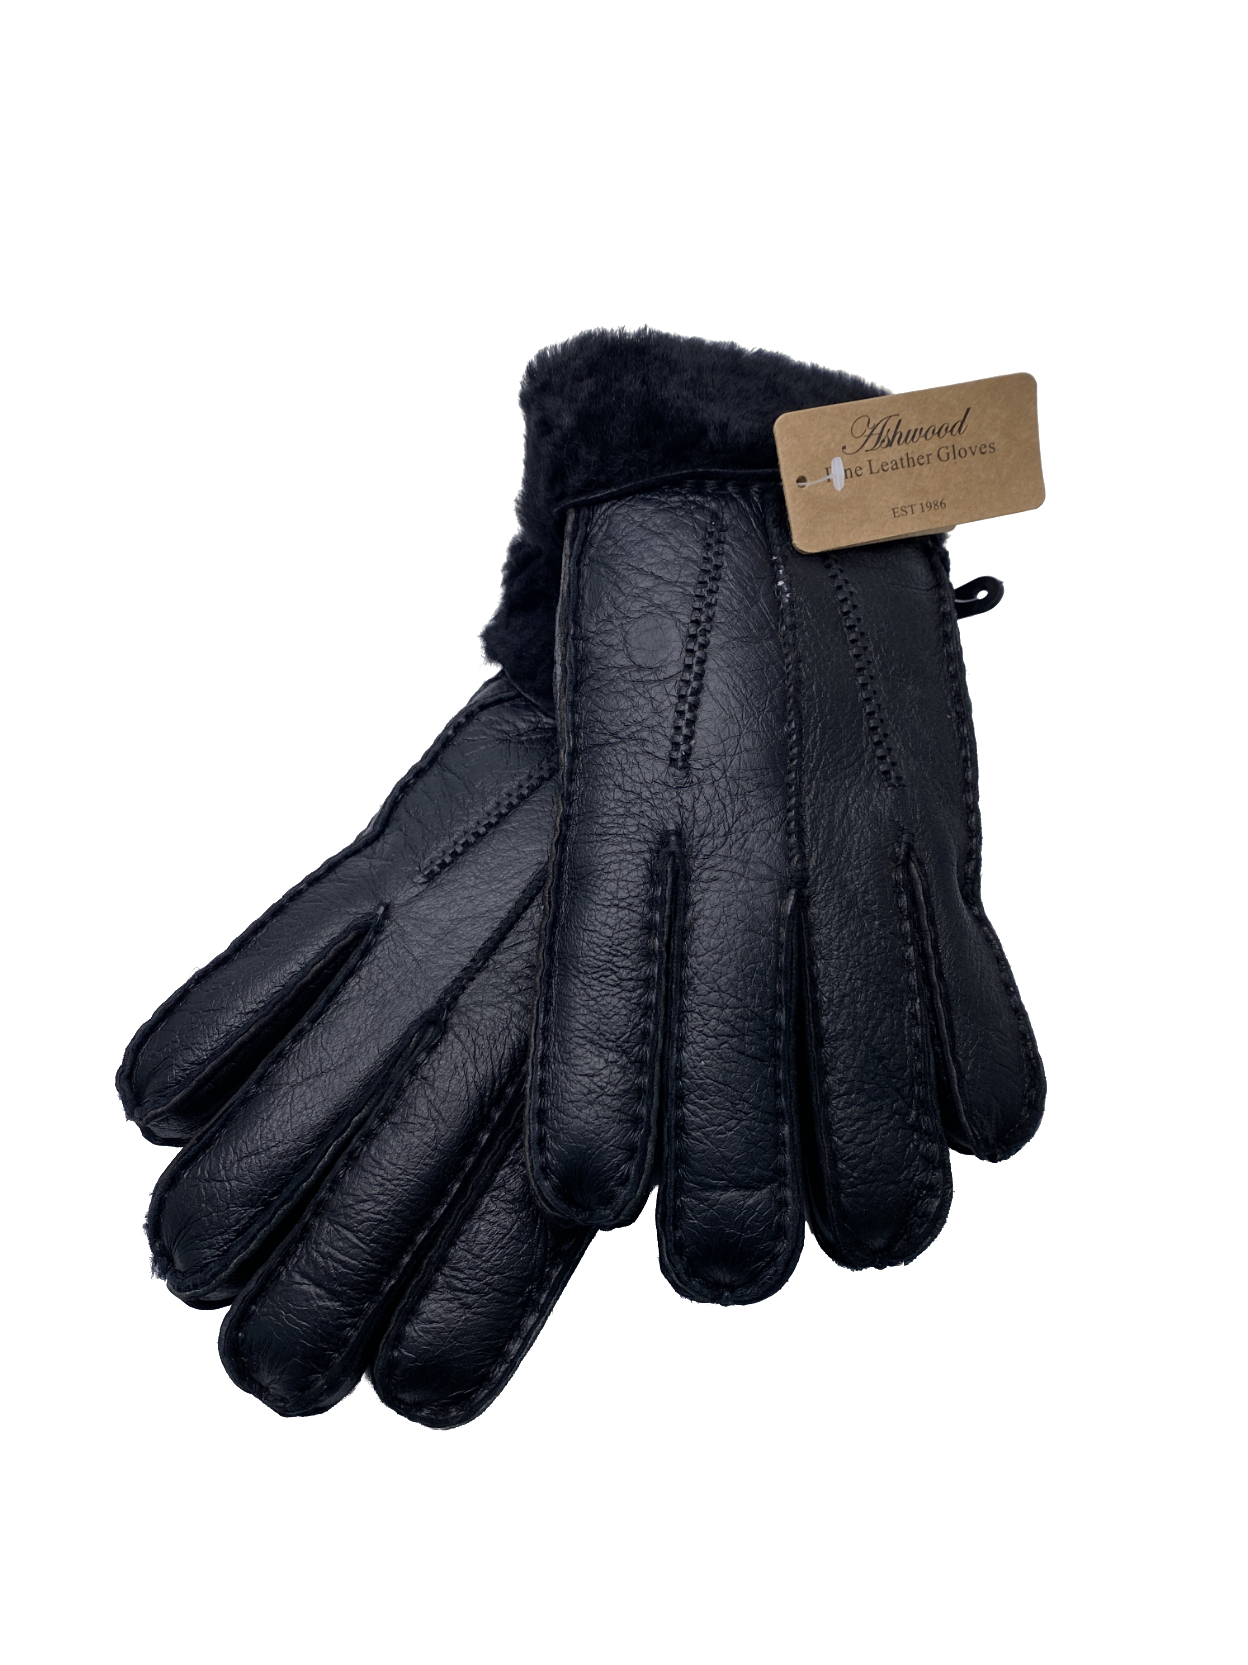 Ashwood Black Fine Leather Gloves UK S/M